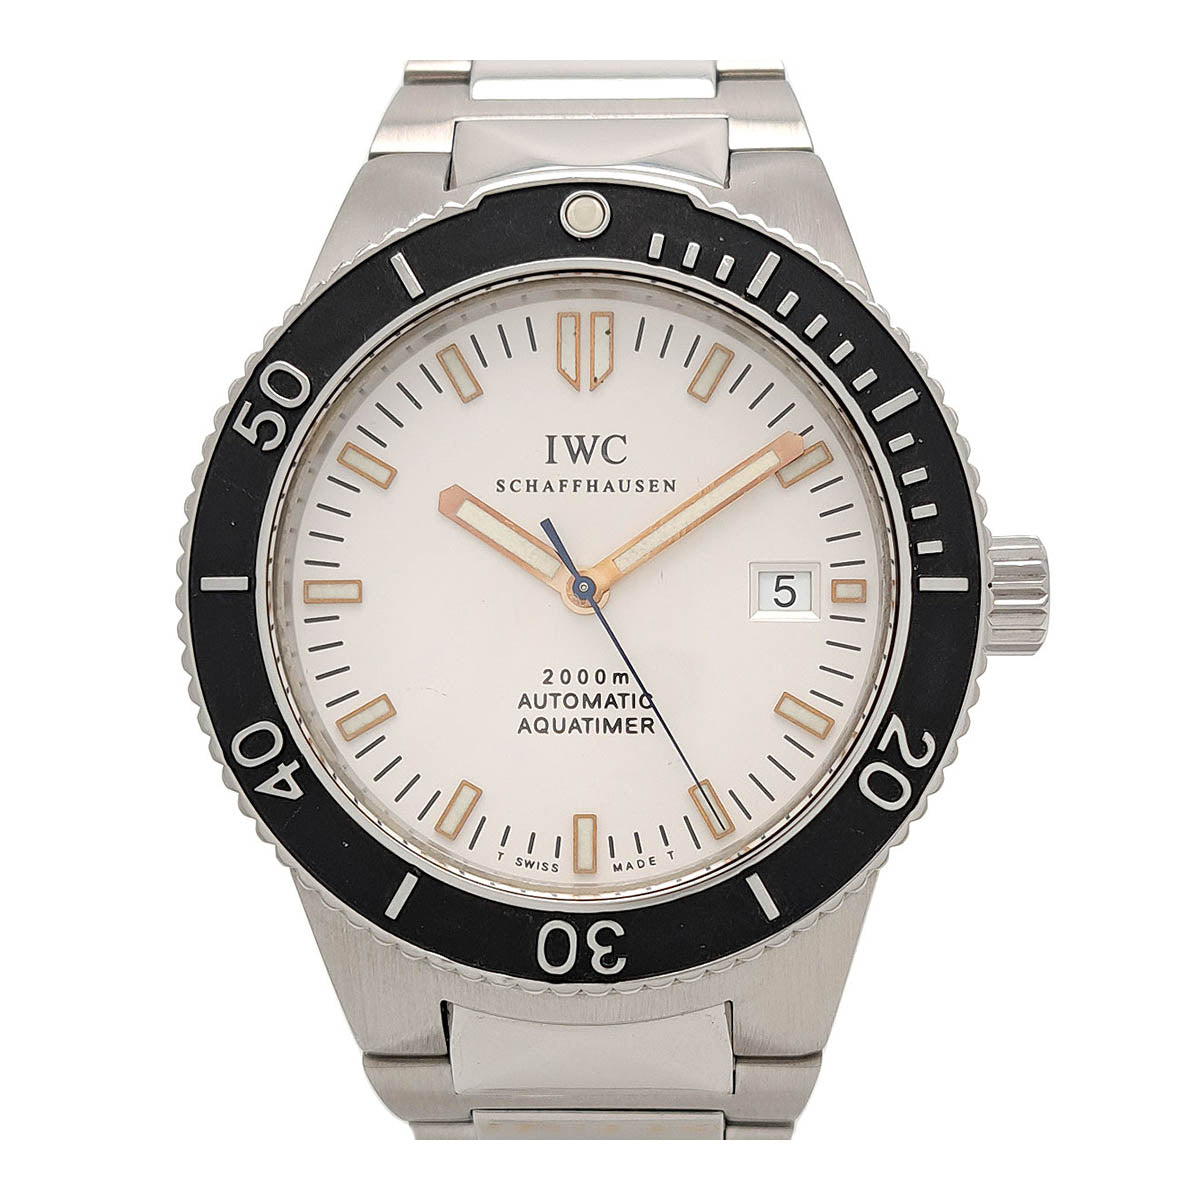 IWC GST Aquatimer Stainless Steel Men's Watch, Model IW353603 IW353603